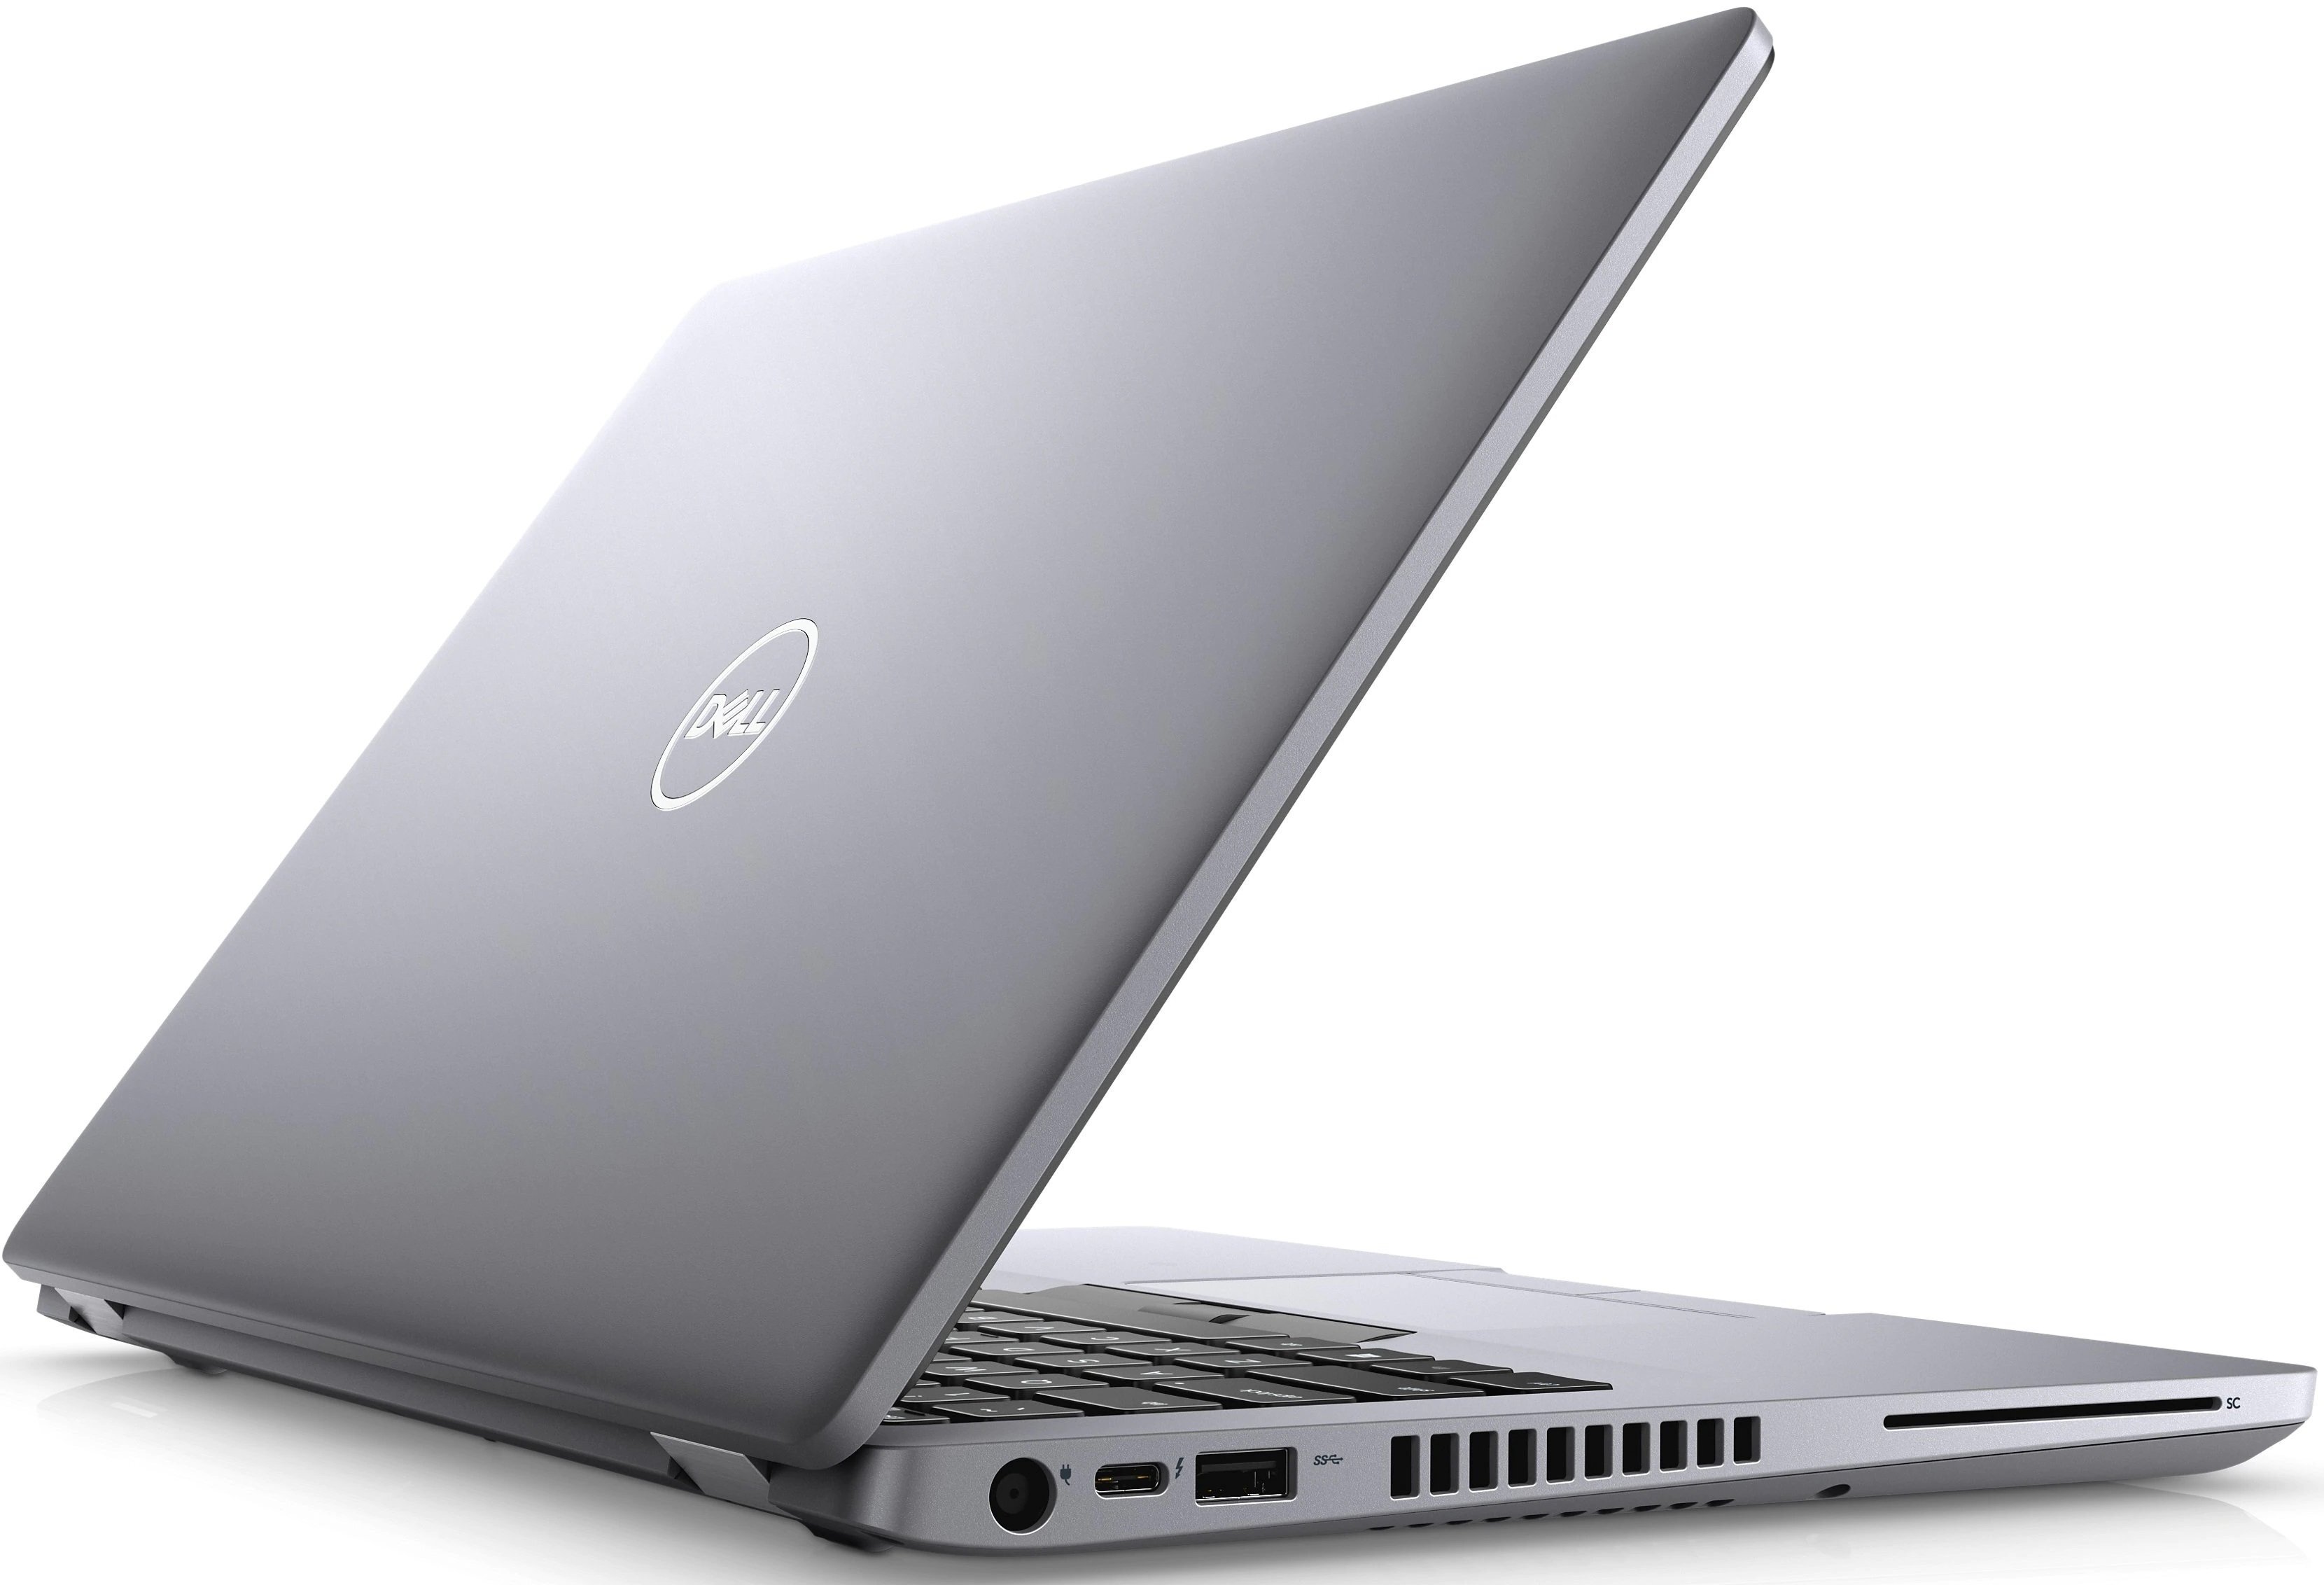 Ноутбук Dell Latitude 5411 Core i7-10850H (2,7GHz) 14,0" FullHD WVA Antiglare 300 nits16GB (1x16GB) DDR4 512GB SSD Intel UHD Graphics FPR, TPM,Thunderbolt 3,4 cell (68Whr)W10 Pro 3y NBD,gray-39127